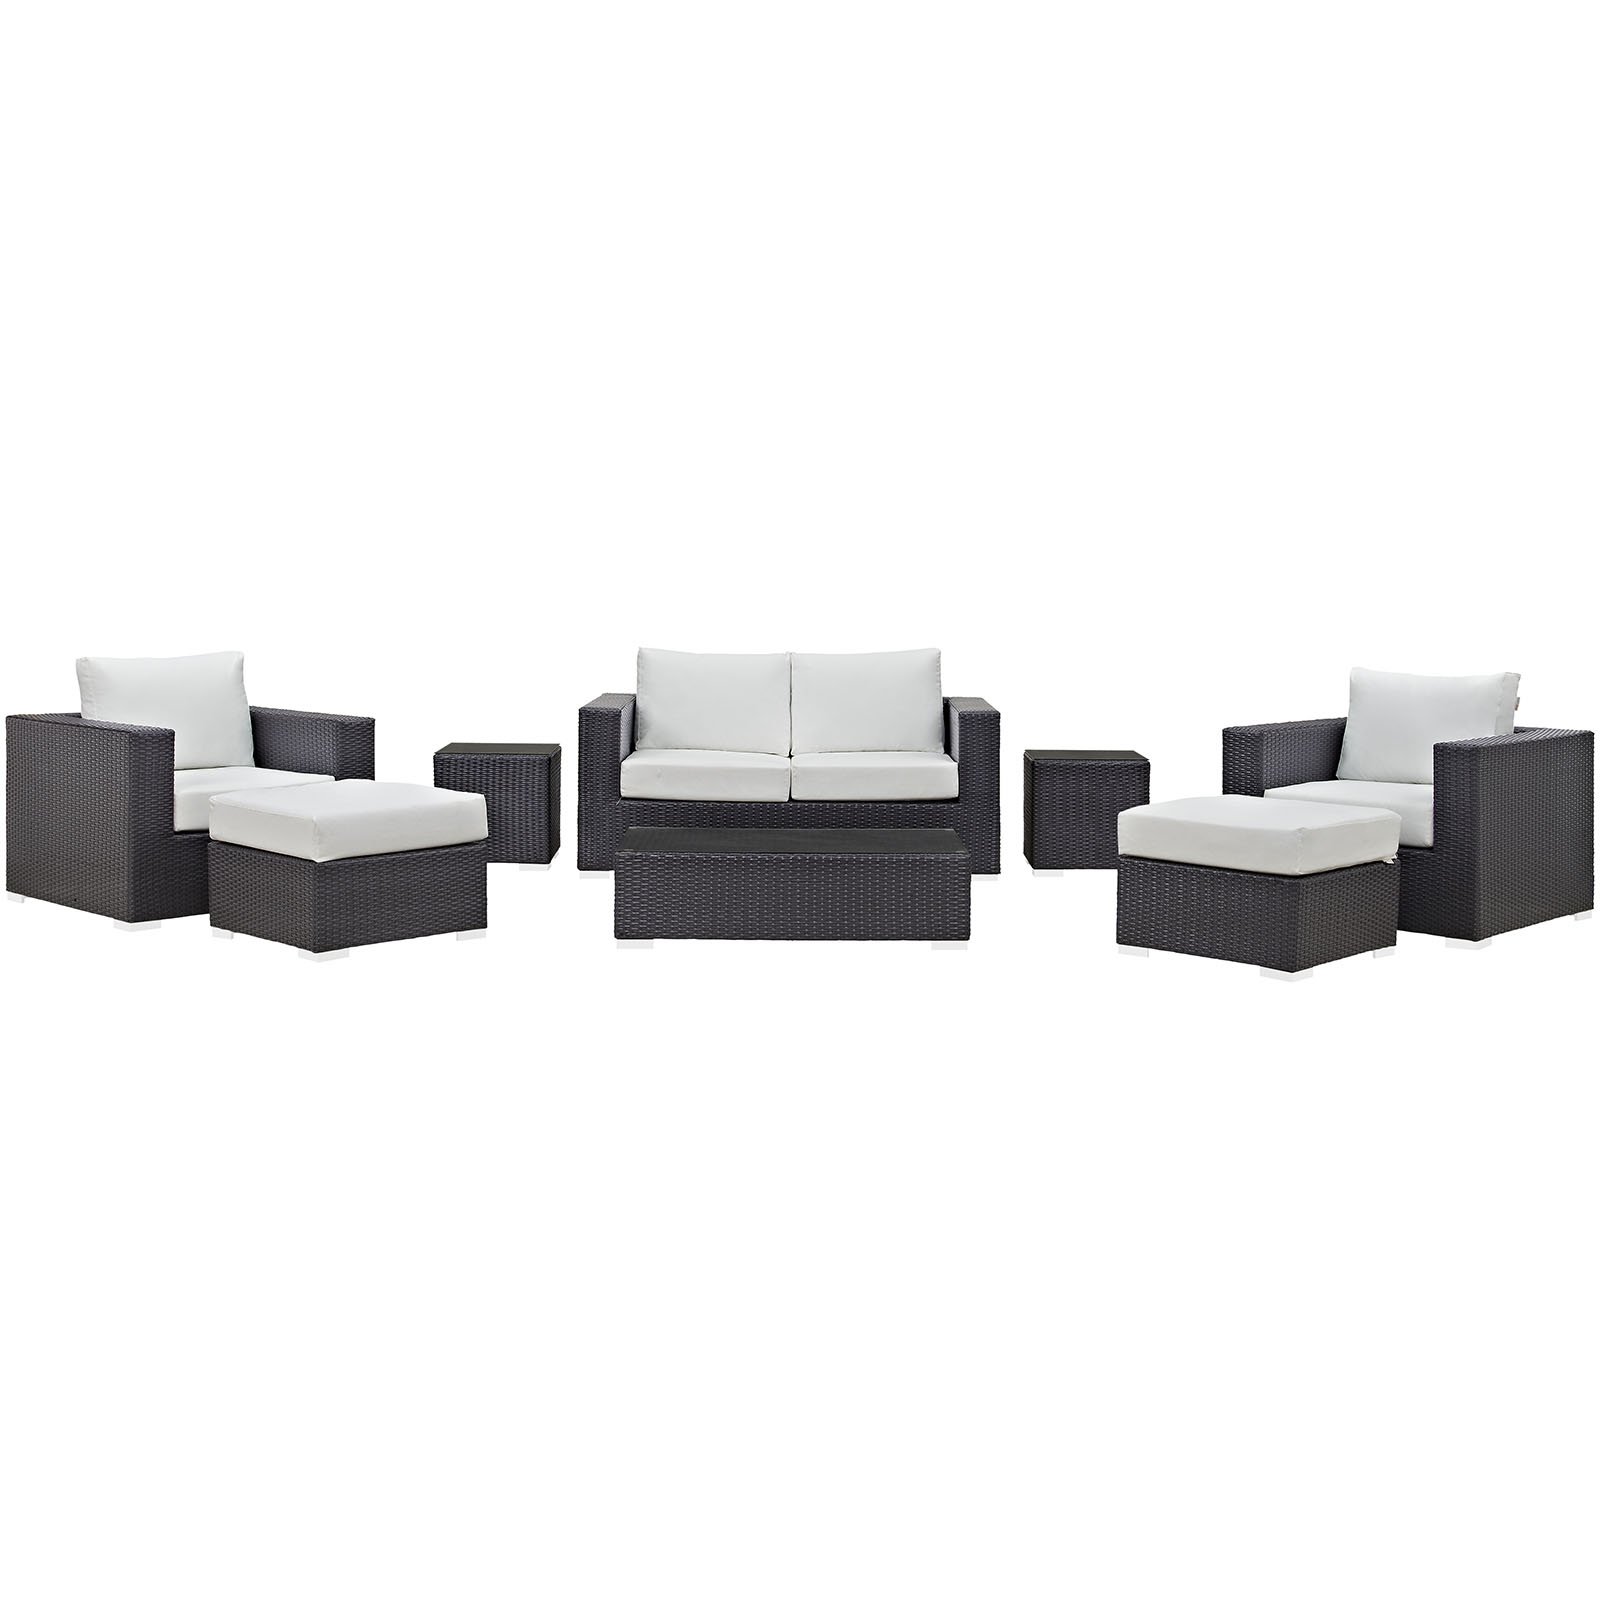 Modway Convene 8 Piece Outdoor Patio Sofa Set in Espresso White - image 4 of 9